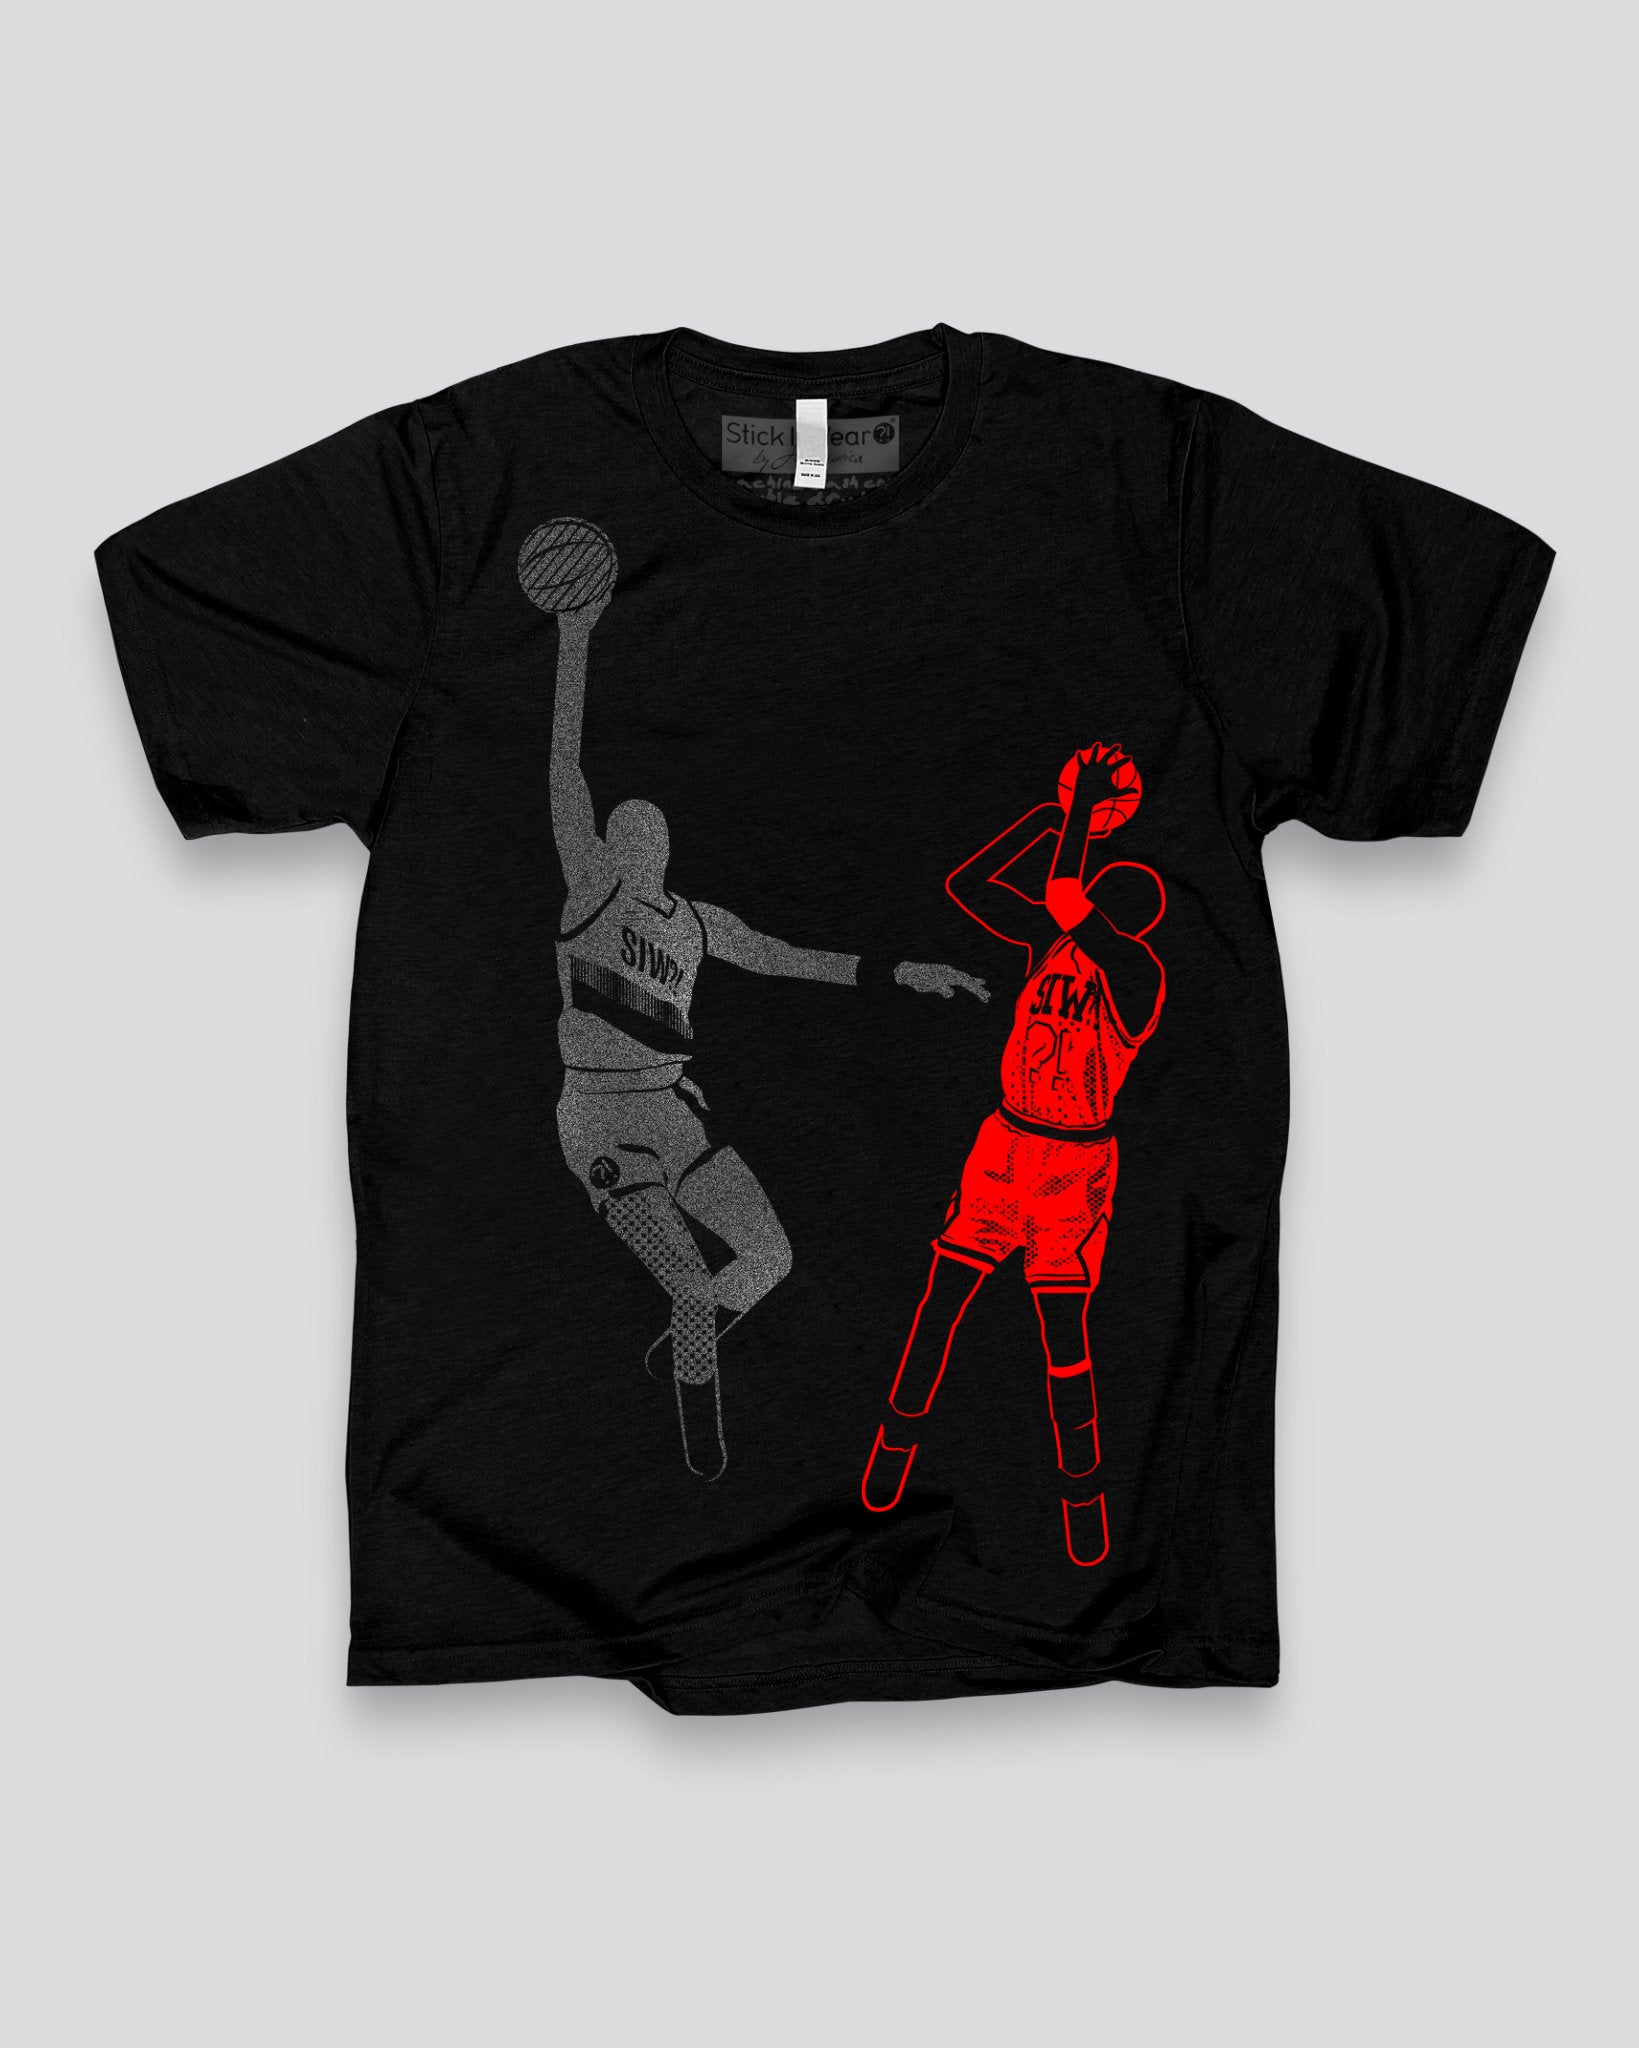 Basketball Sports Fashion Apparel Wear?! It Stick 